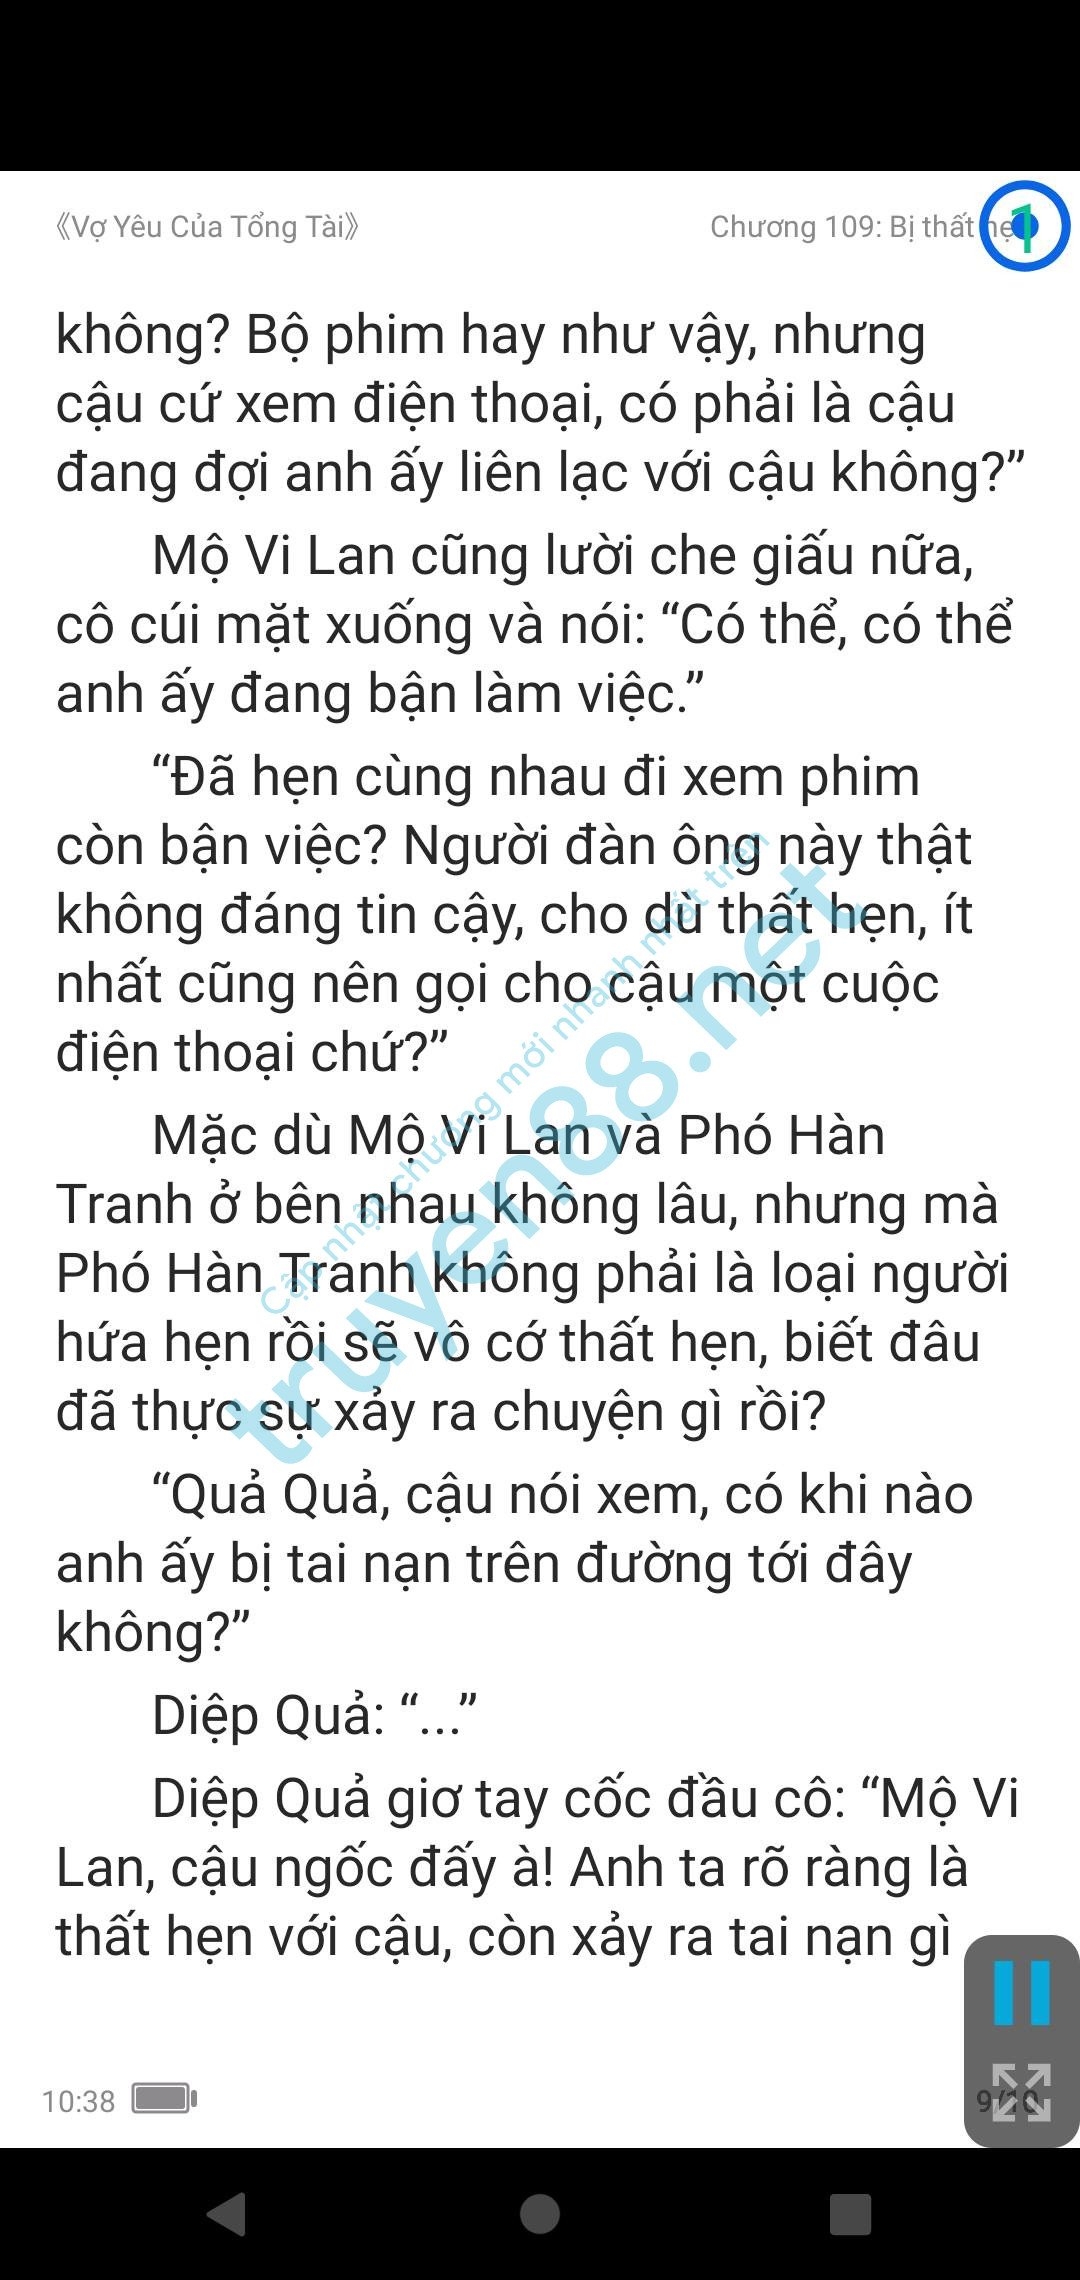 vo-yeu-cua-tong-tai-mo-vi-lan--pho-han-tranh-109-1